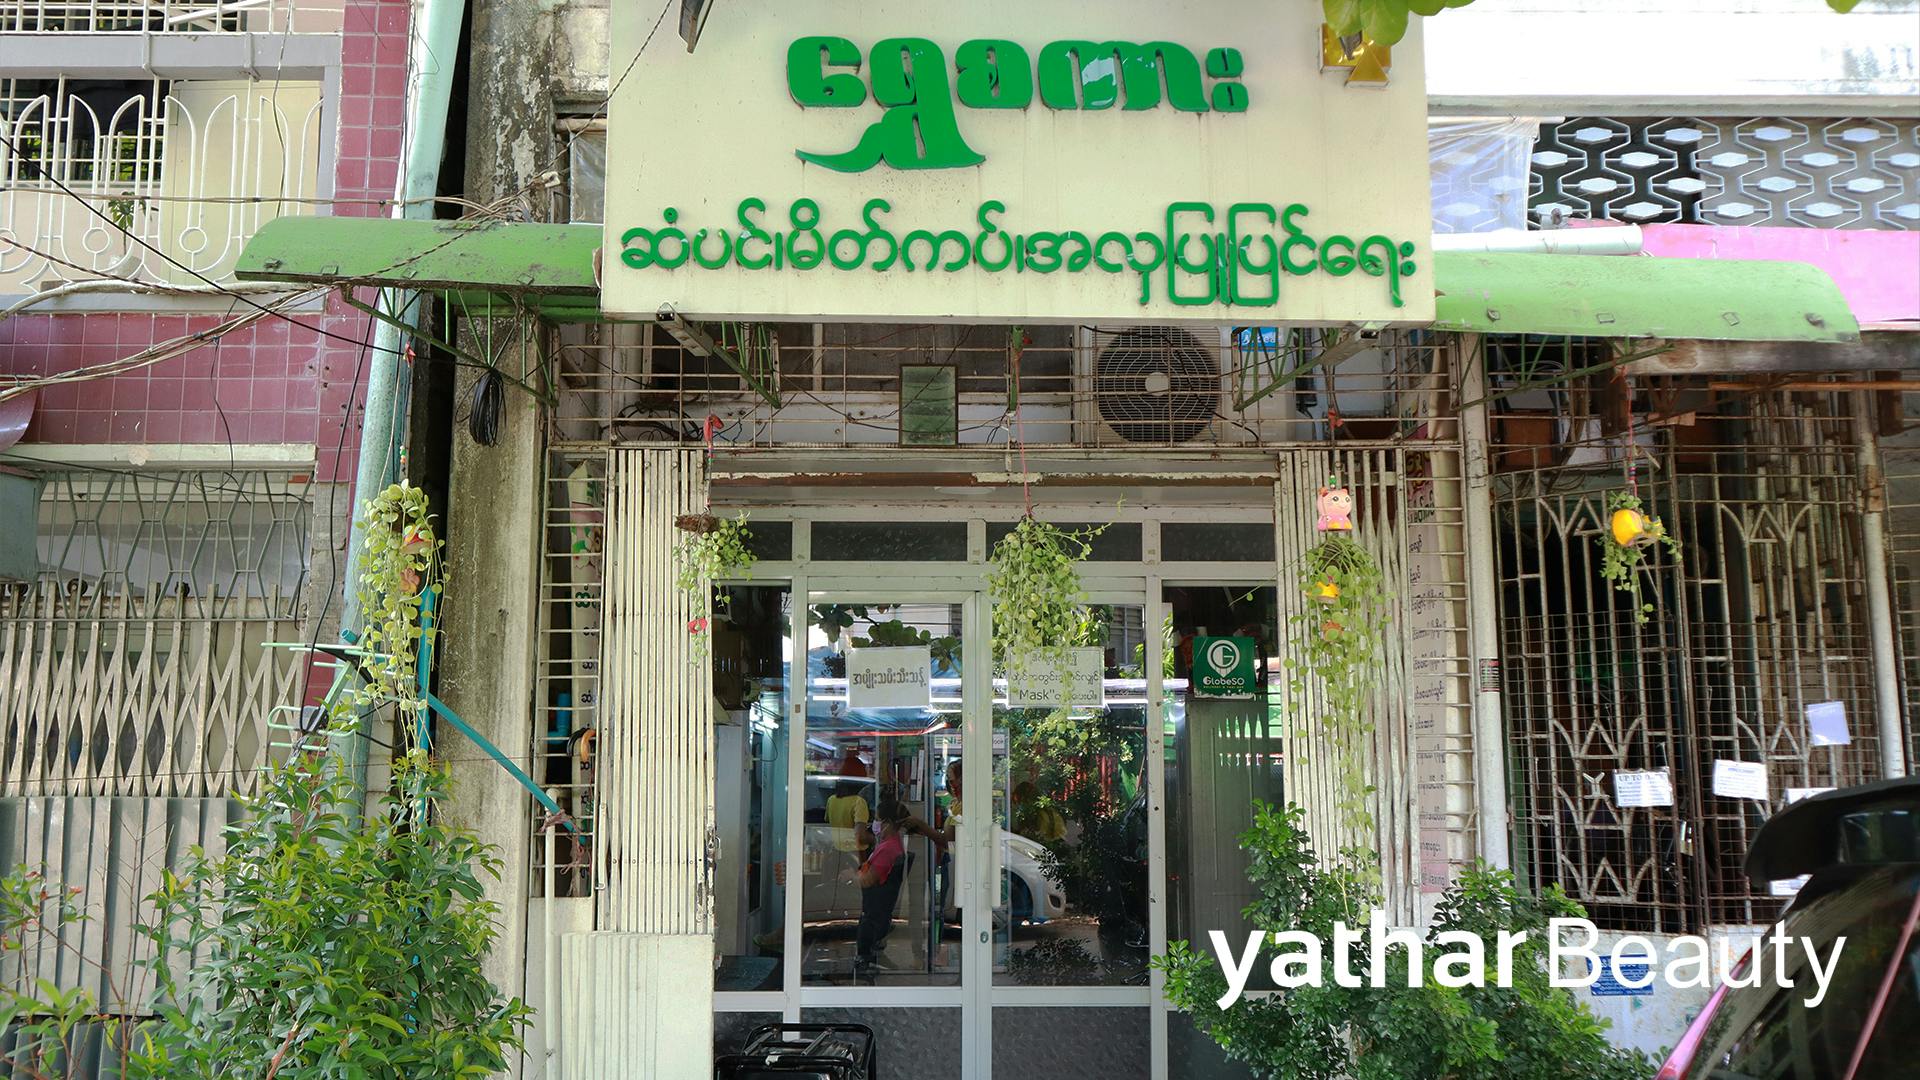 Shwe Sagar Beauty Salon ရဲ့ တည်ထောင်သူဖြစ်တဲ့ မရွှေရီ နှင့် တွေ့ဆုံခြင်း